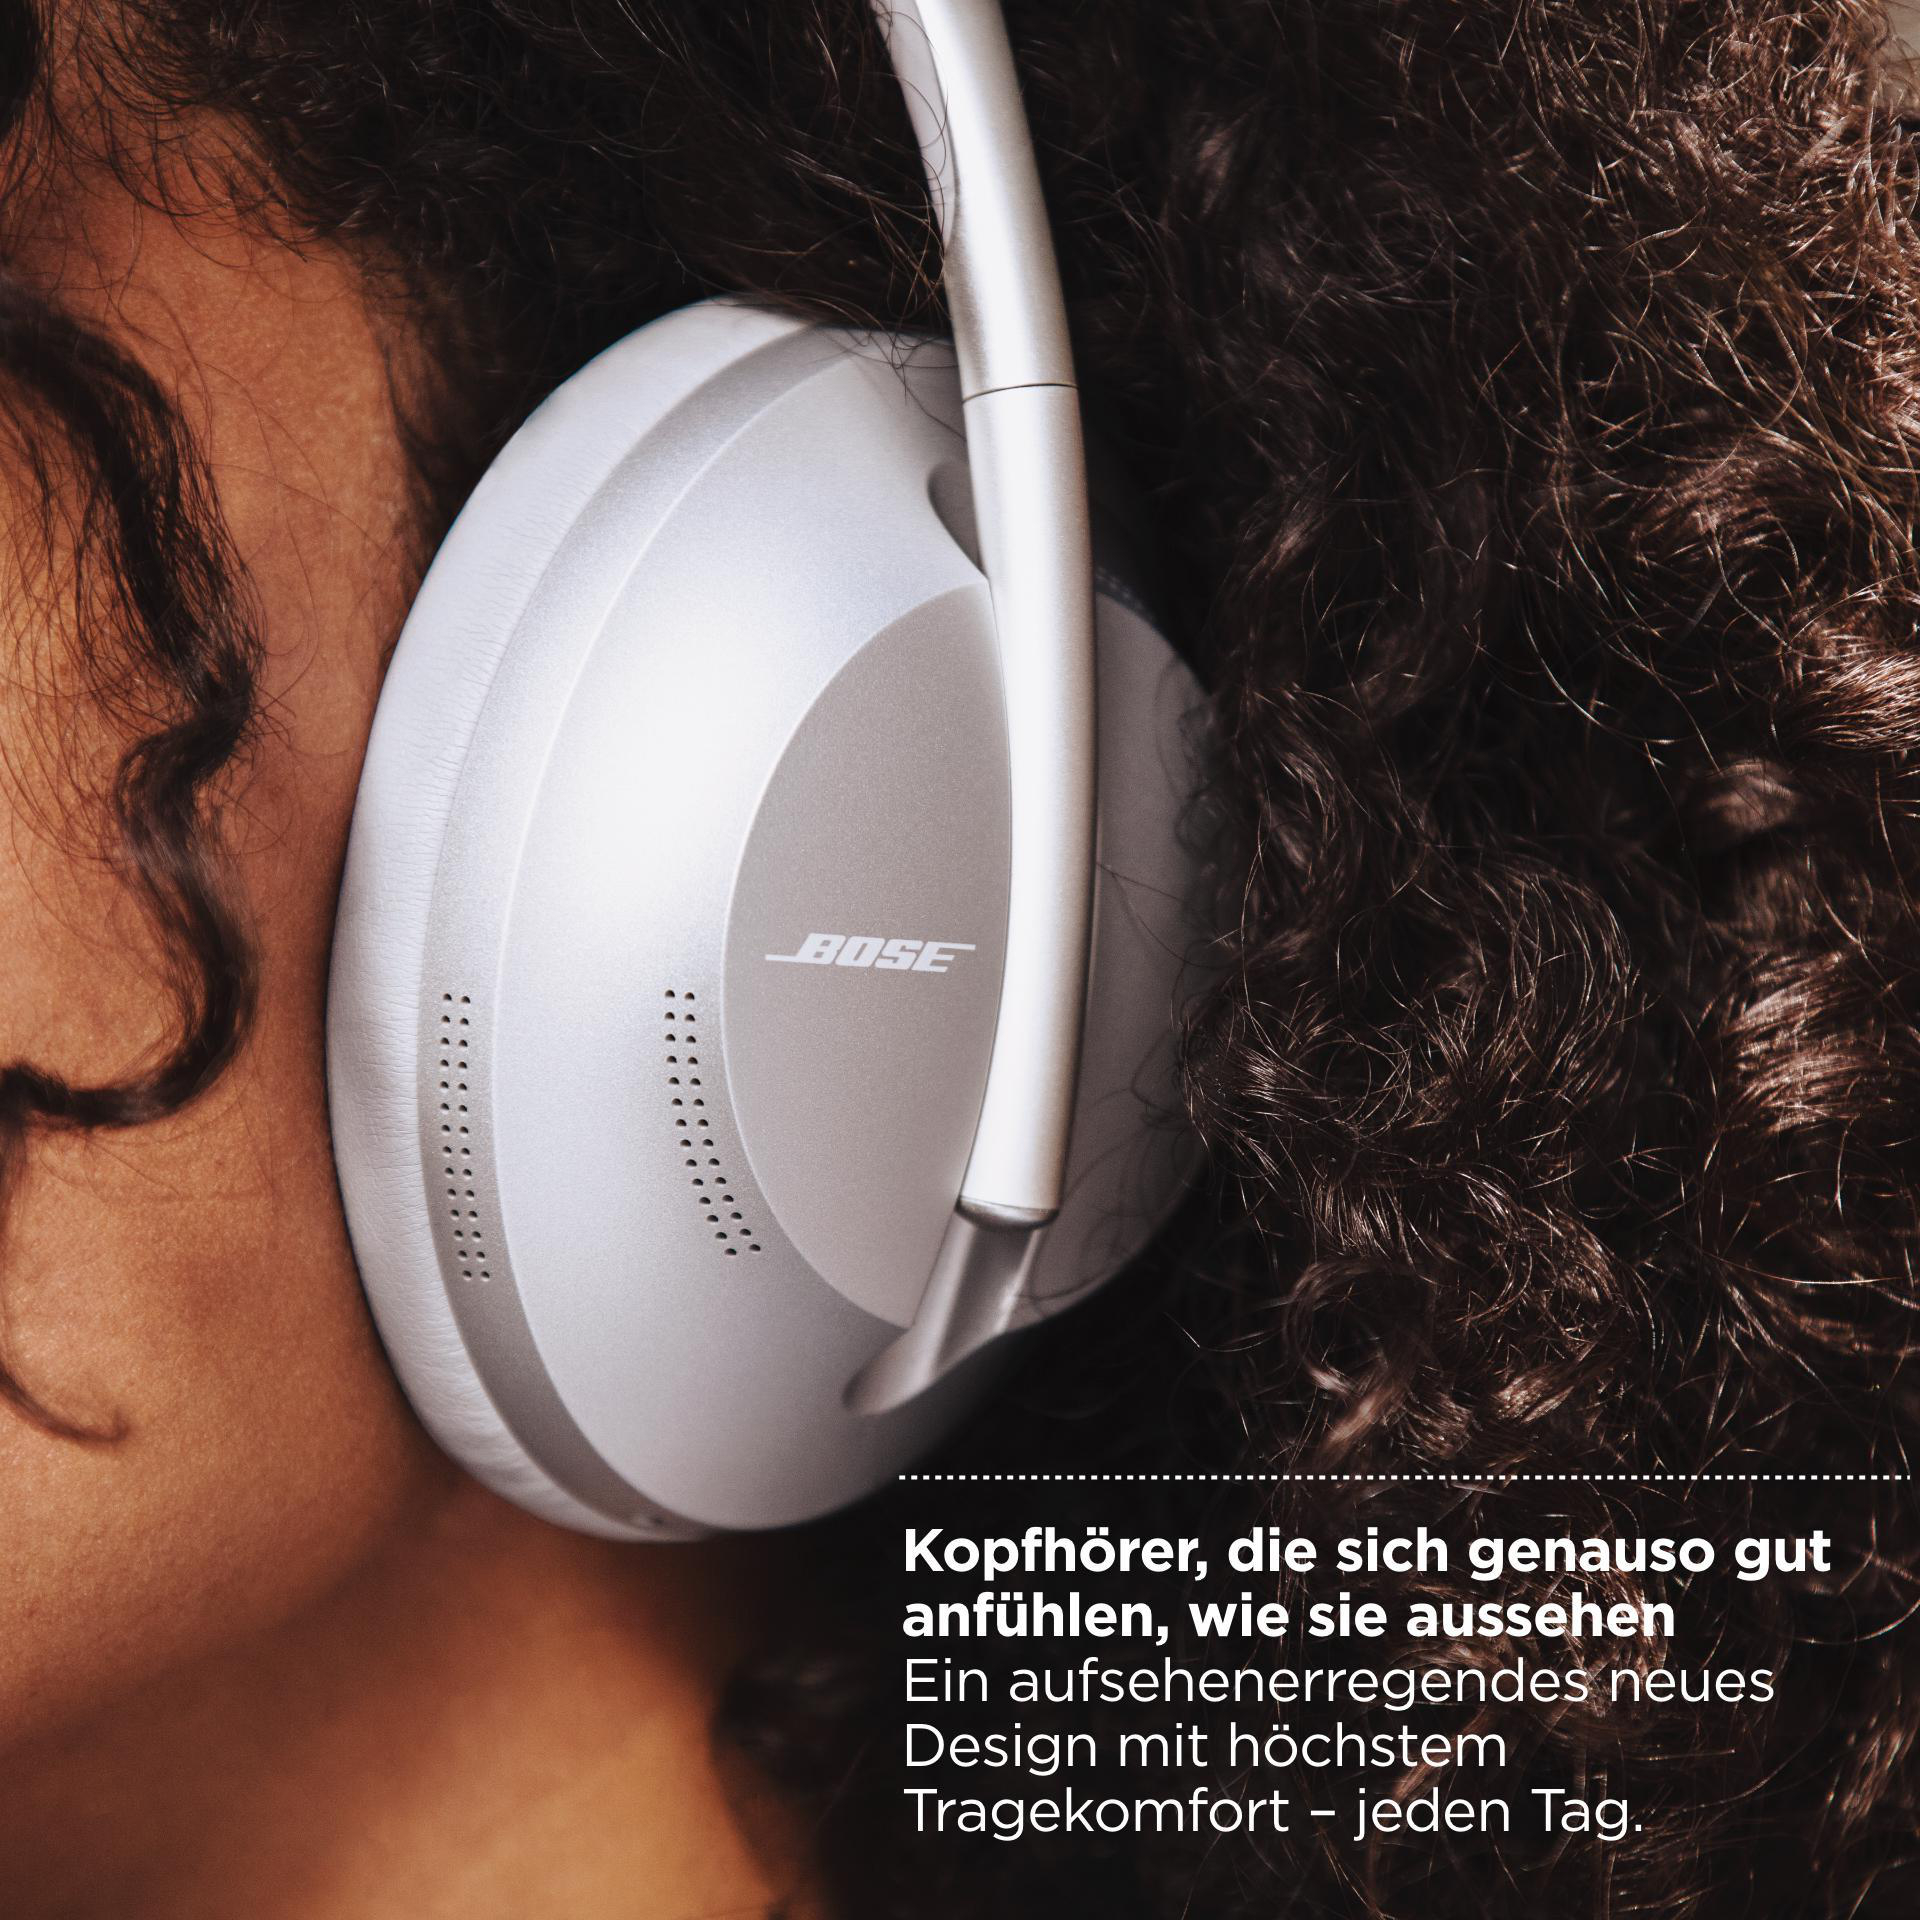 Schwarz Bluetooth Headphones Kopfhörer BOSE kabellose Noise-Cancelling, 700 Over-ear